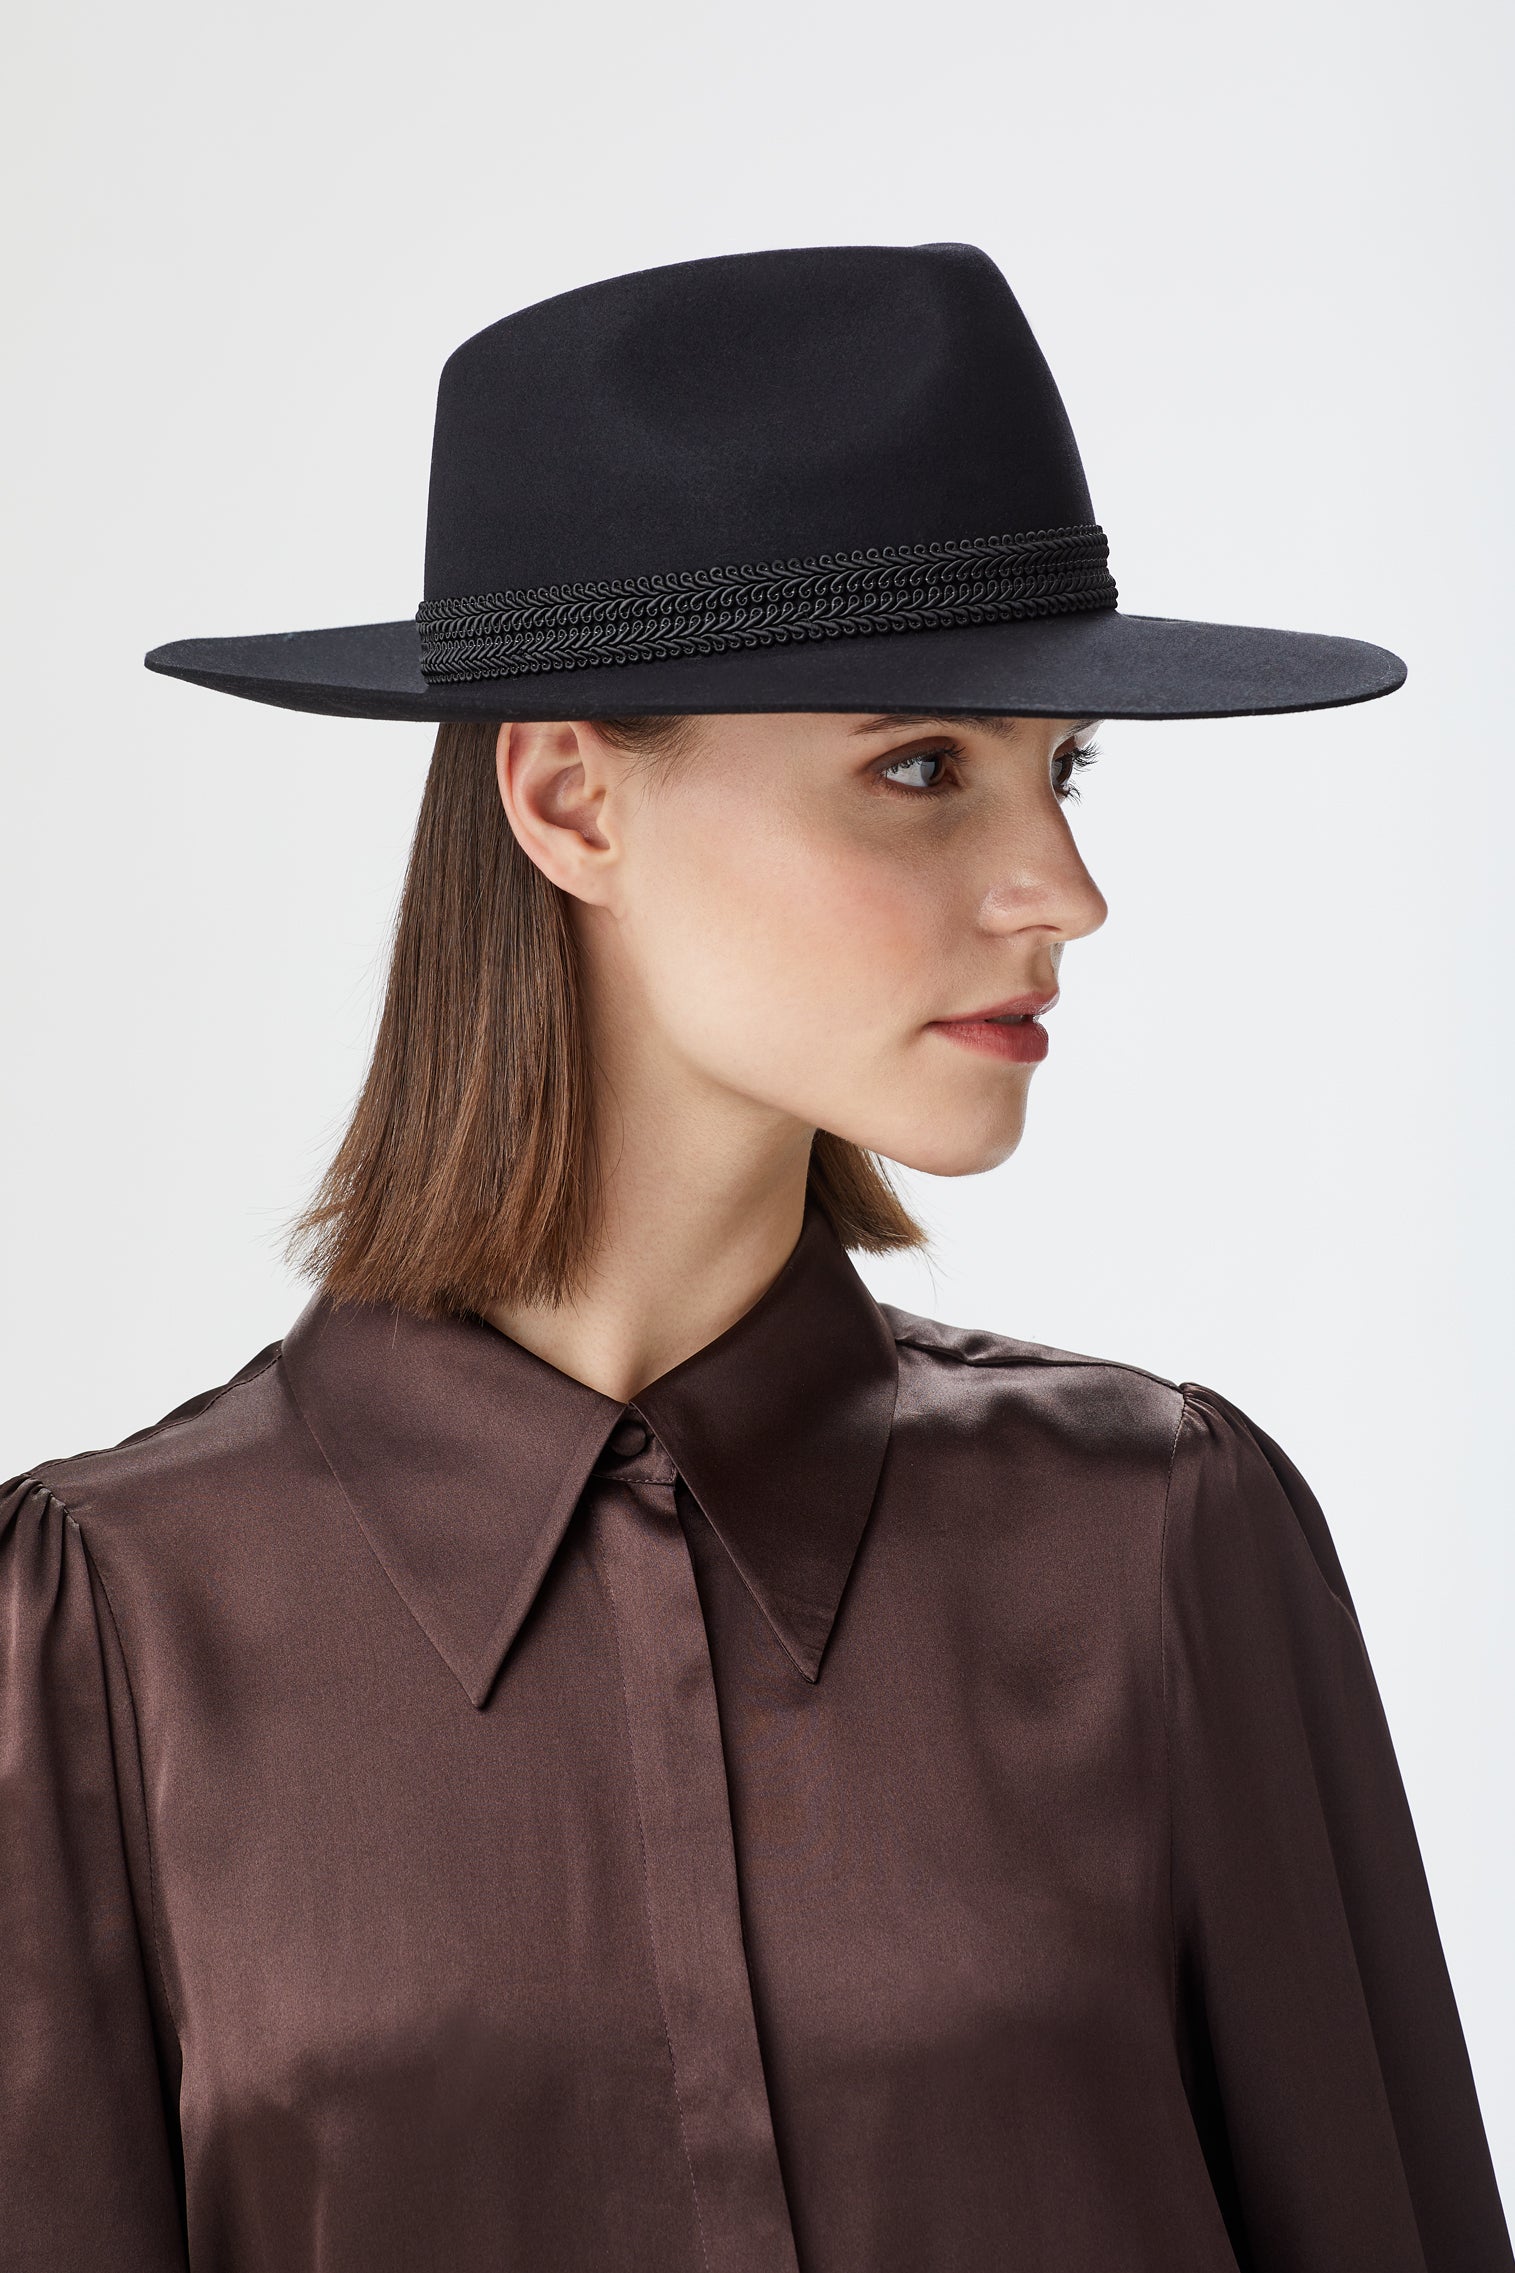 Escorial Wool Meredith Fedora - Women’s Hats - Lock & Co. Hatters London UK